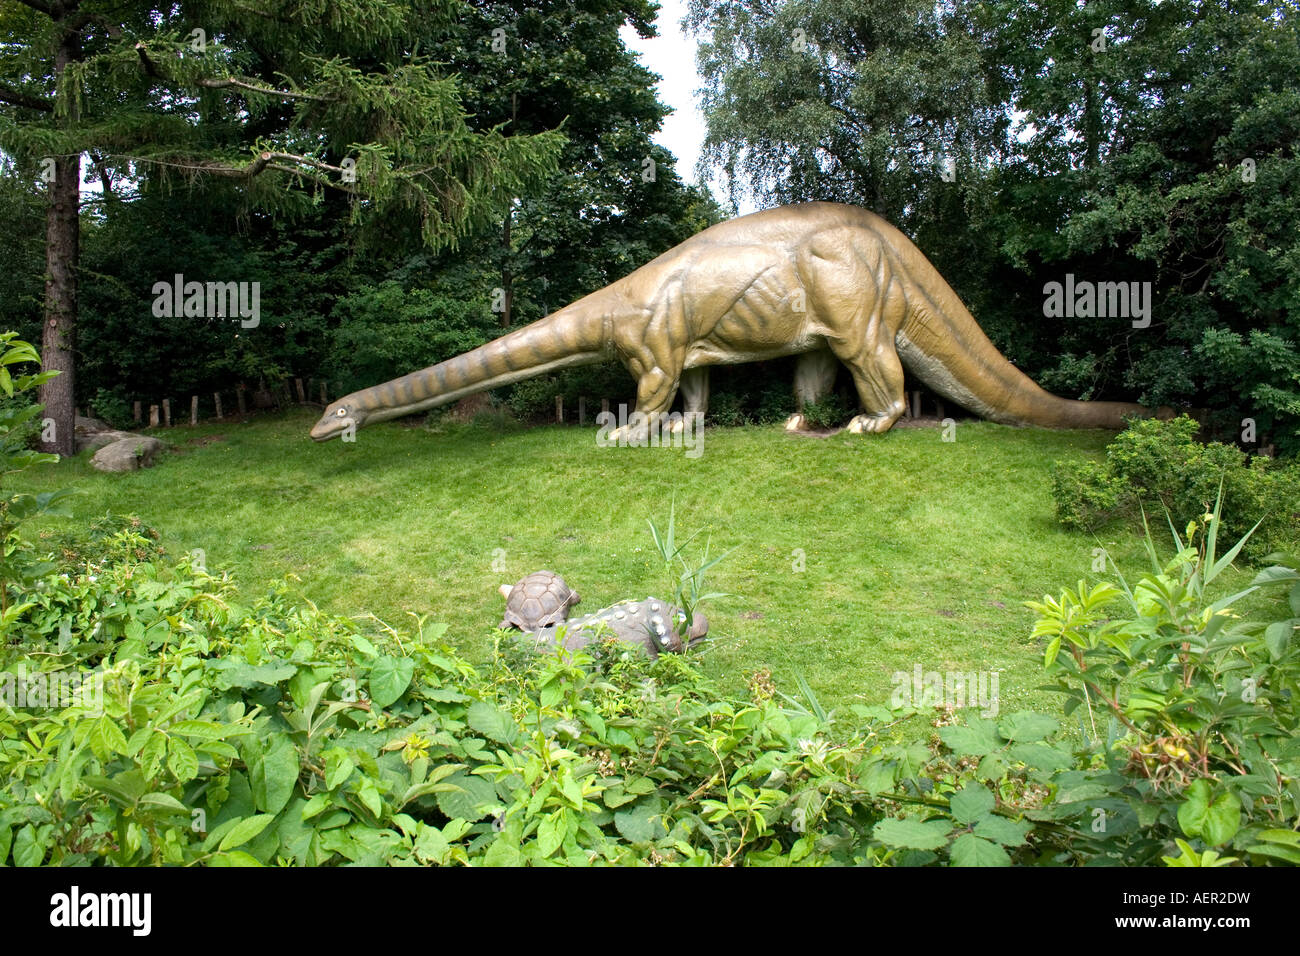 Dinosaur Statue In Hagenbeck Zoological Garden Hamburg Germany